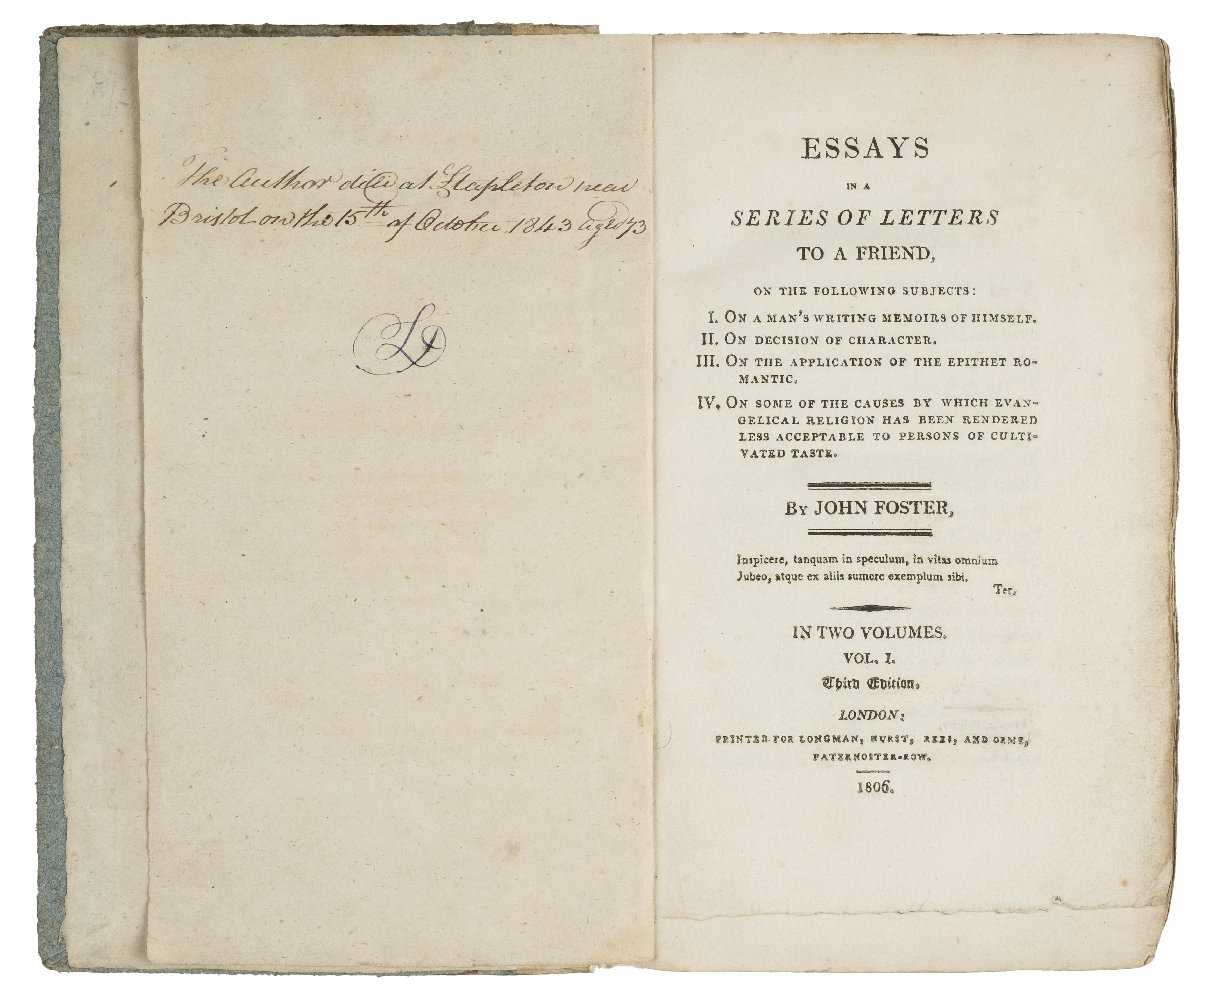 Lot 544 - [Dodgson, Charles Lutwidge, 'Lewis Carroll', 1832-1898].